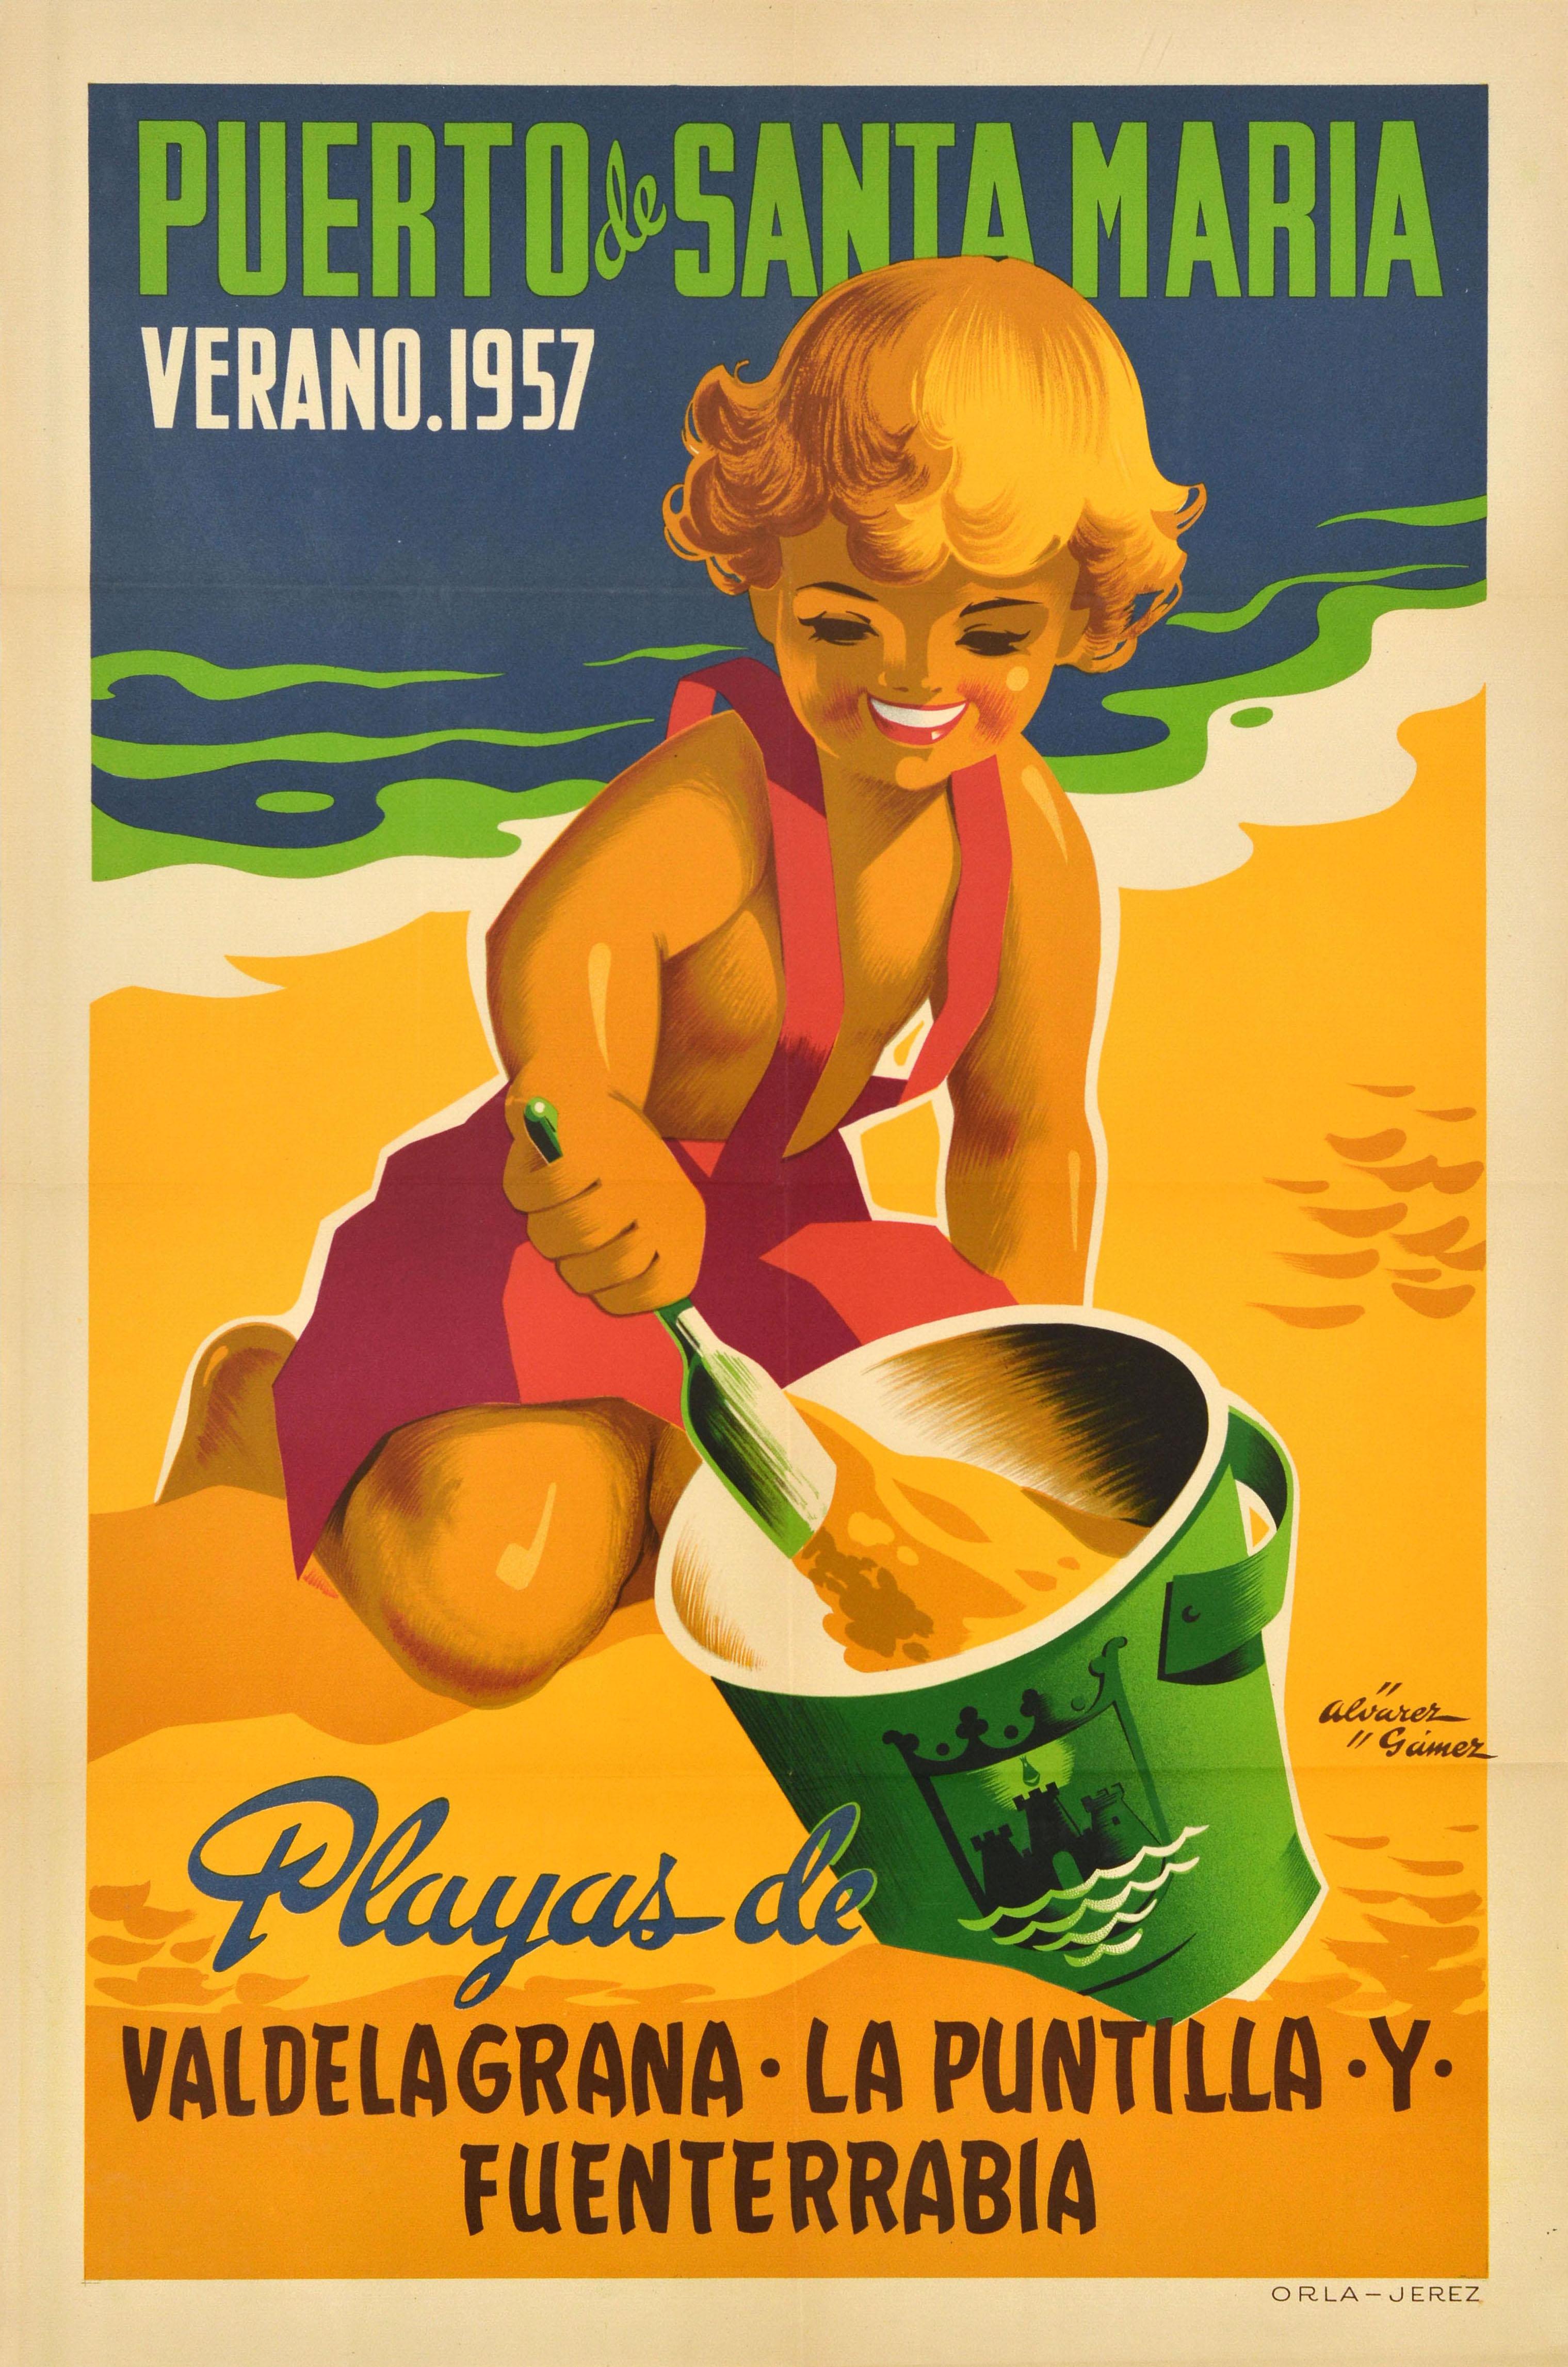 Alvarez Gamez Print - Original Vintage Travel Poster Puerto De Santa Maria Spain Summer Season Beaches